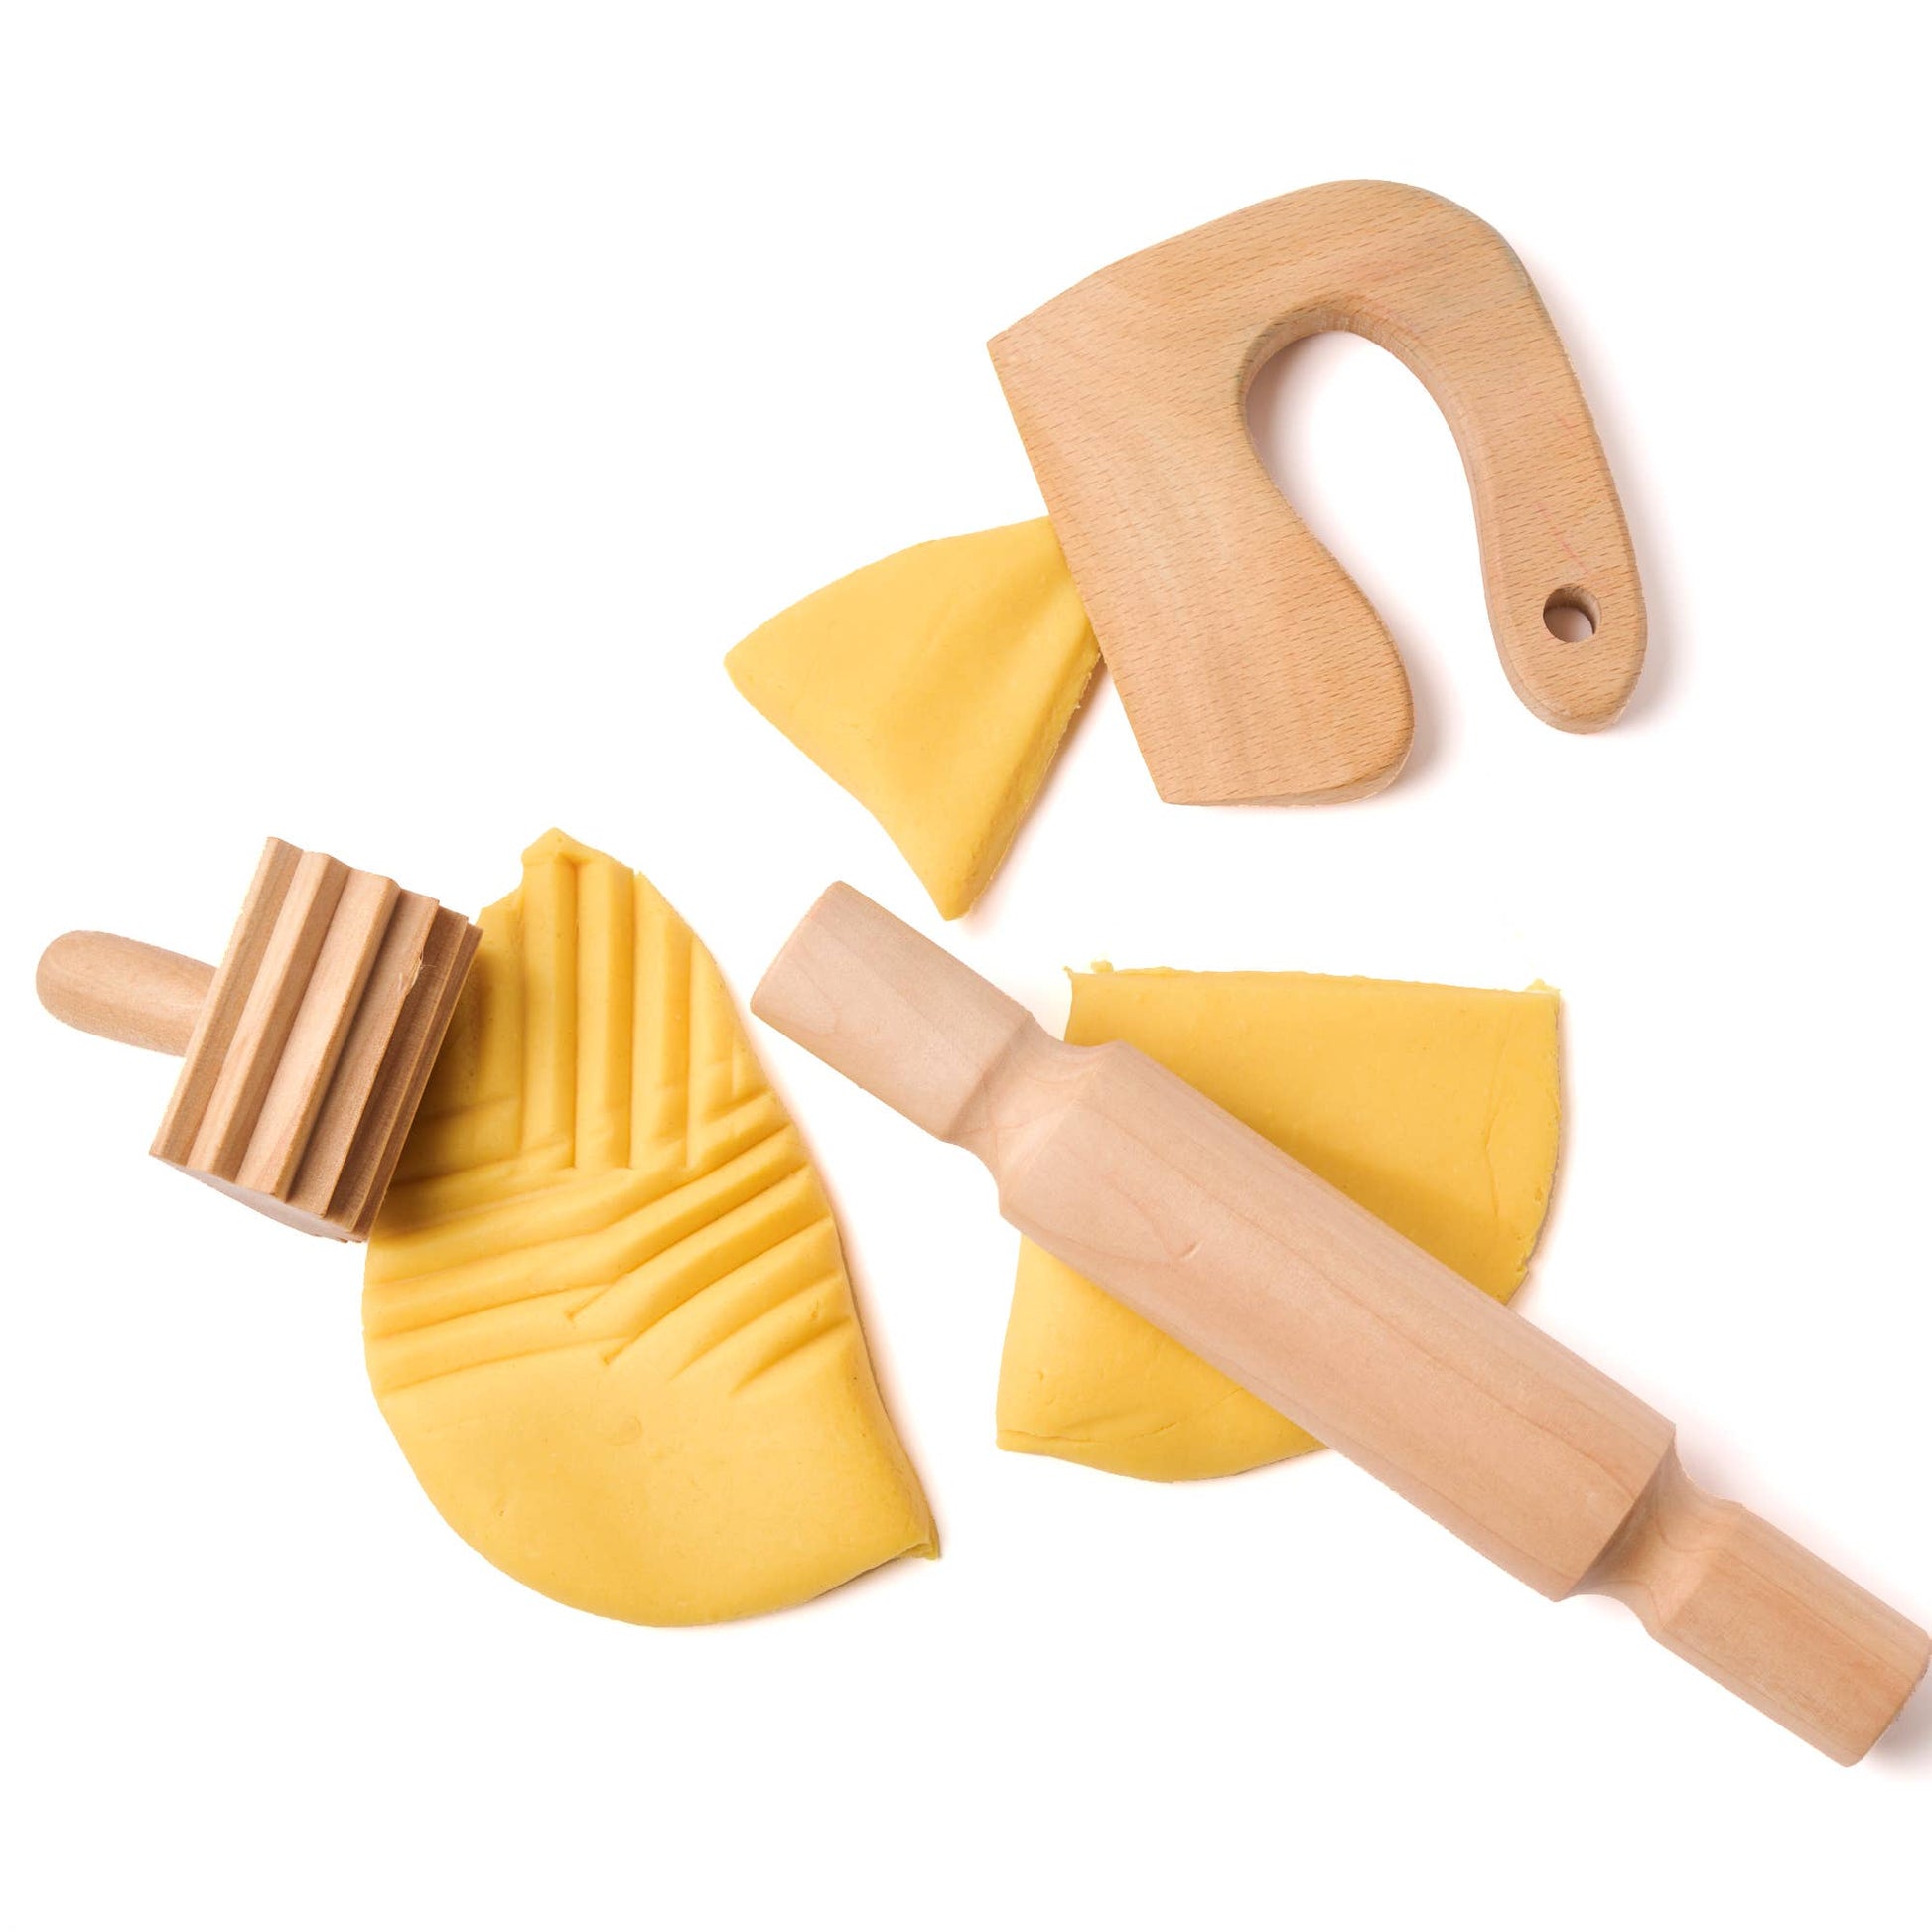 wooden playdough tools set of 3